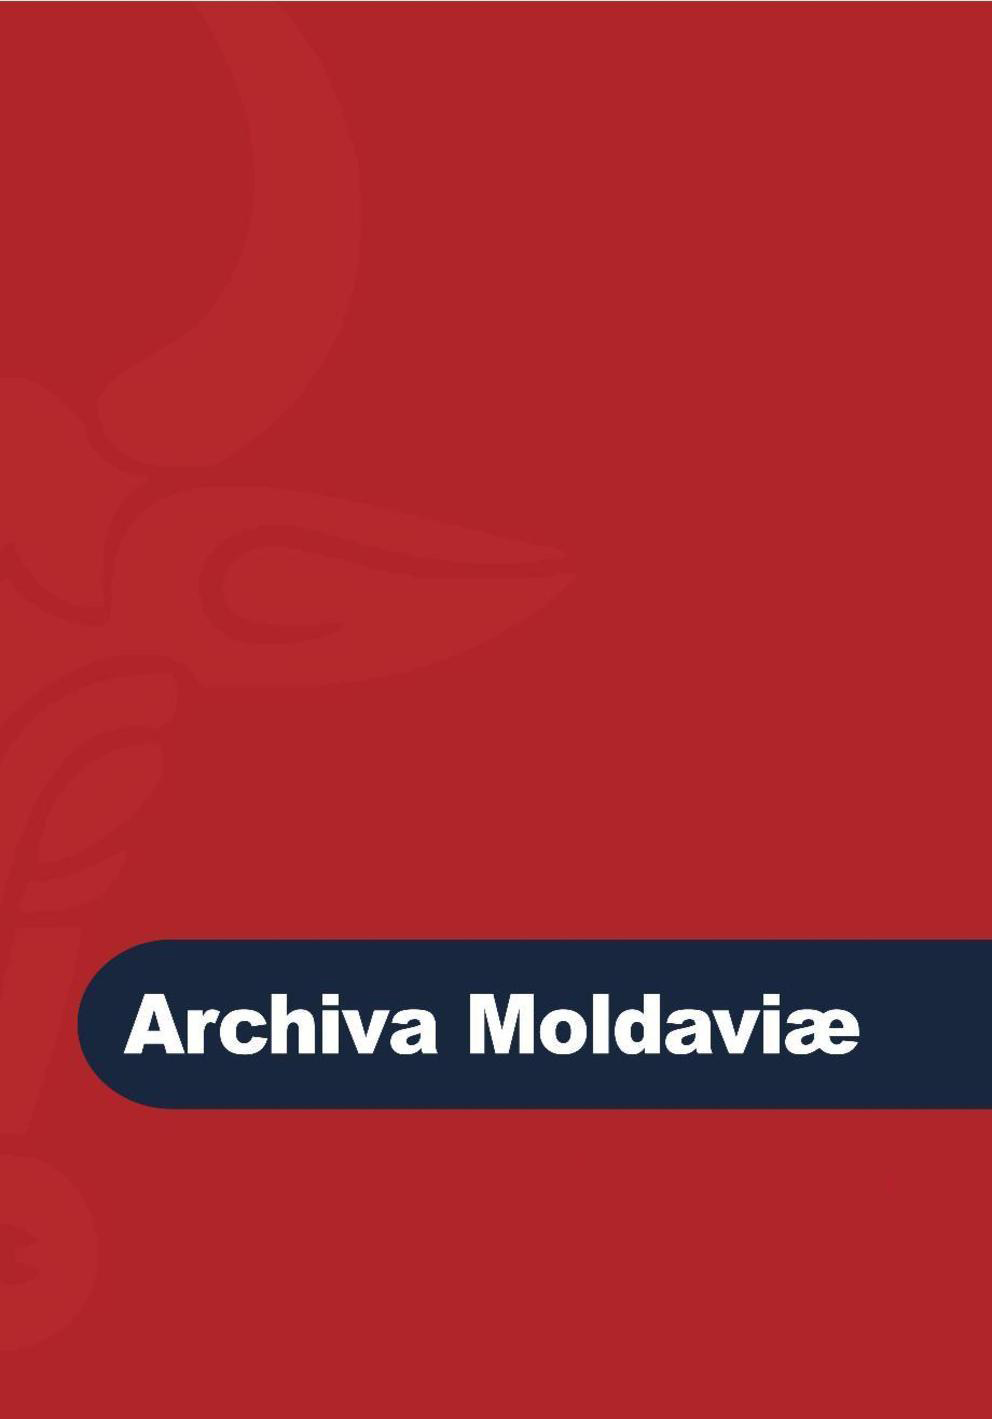 Archiva Moldaviae